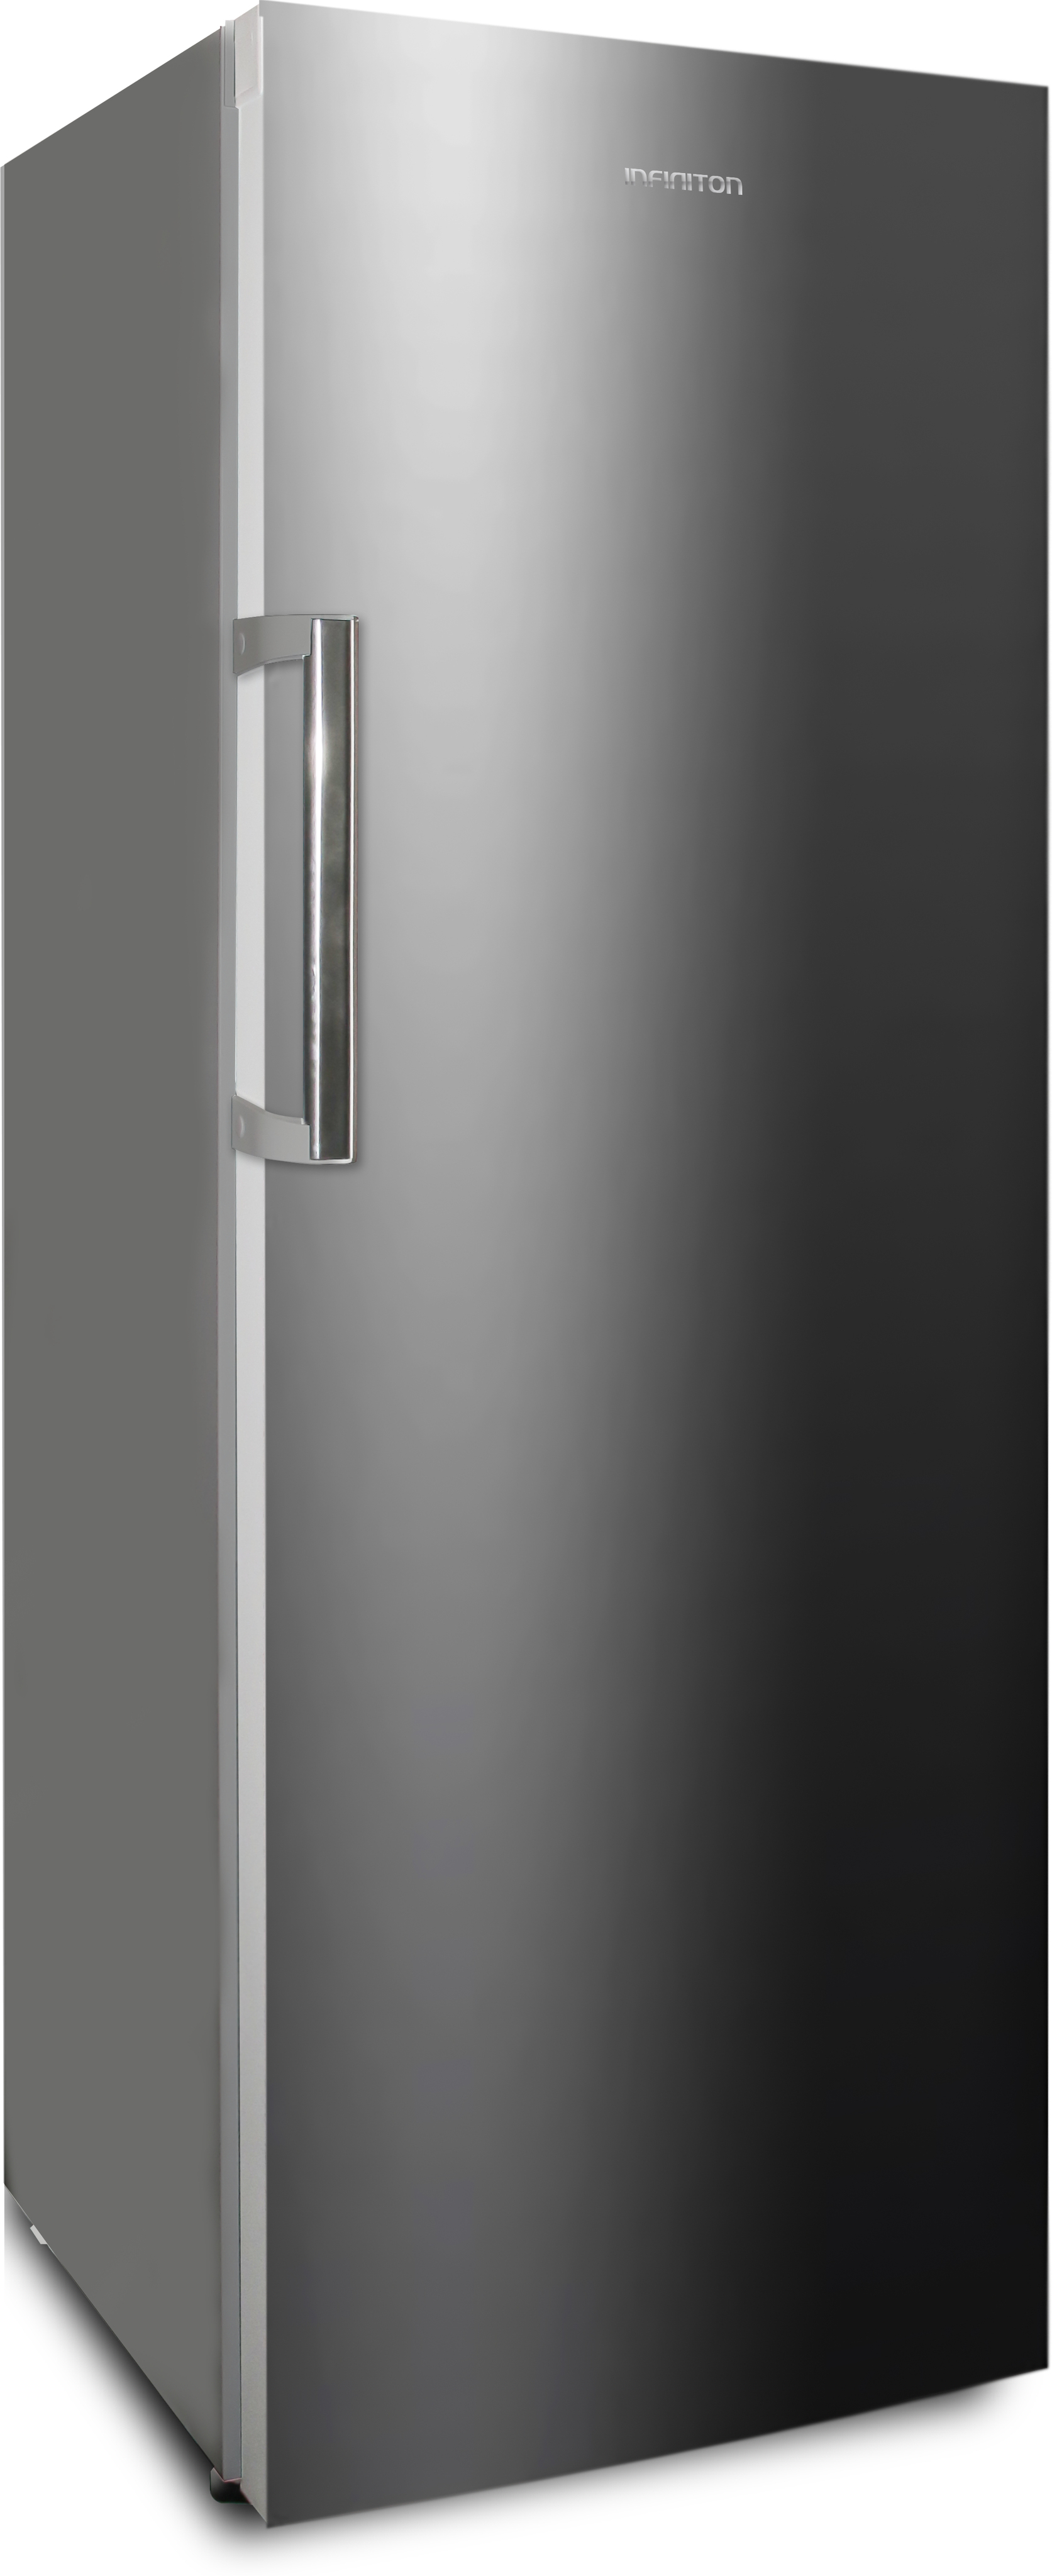 Cooler Infiniton Cl175ix inox 320 litros no frost luz interior 1.75m una puerta 175cm 43 frigorifico 175